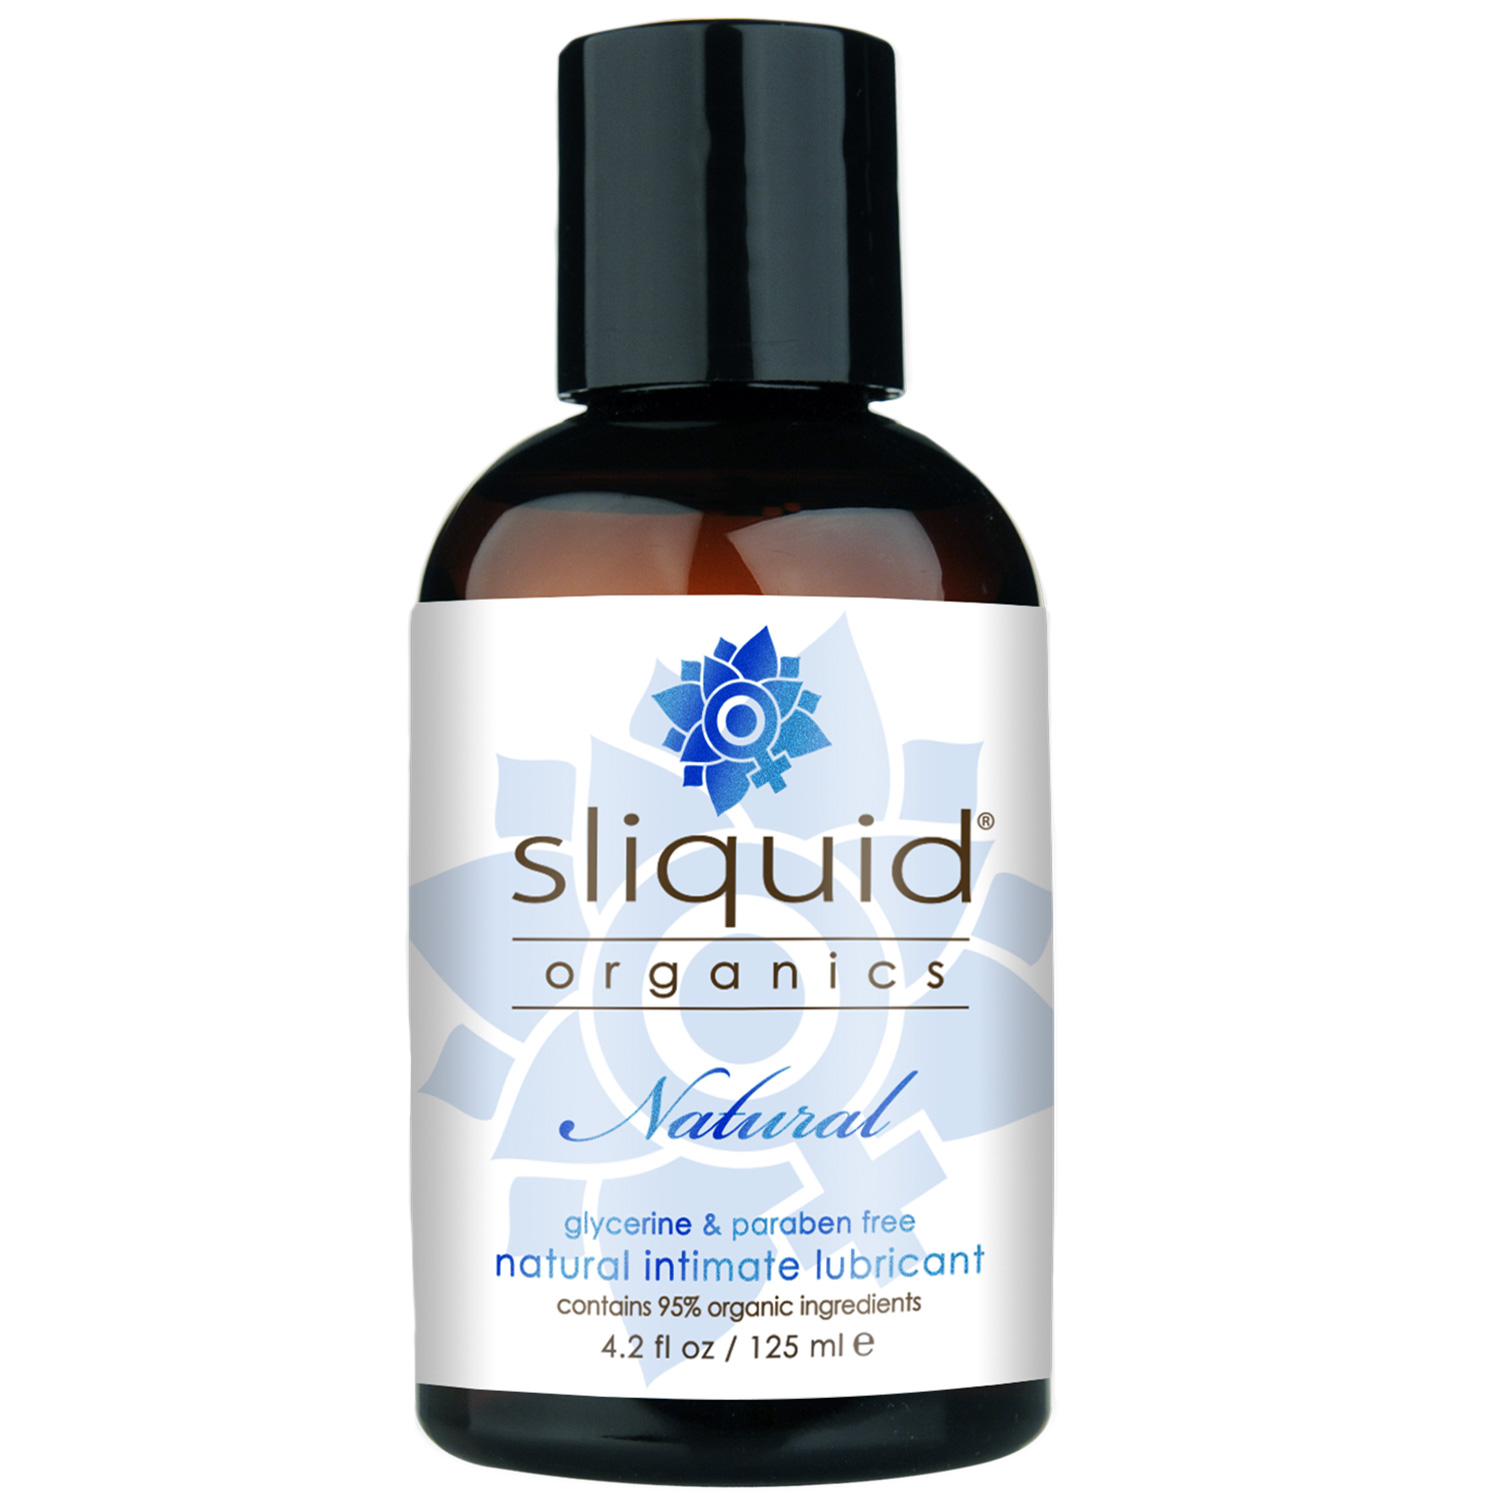 Sliquid Organics Natural Glidecreme 125 ml - Klar thumbnail